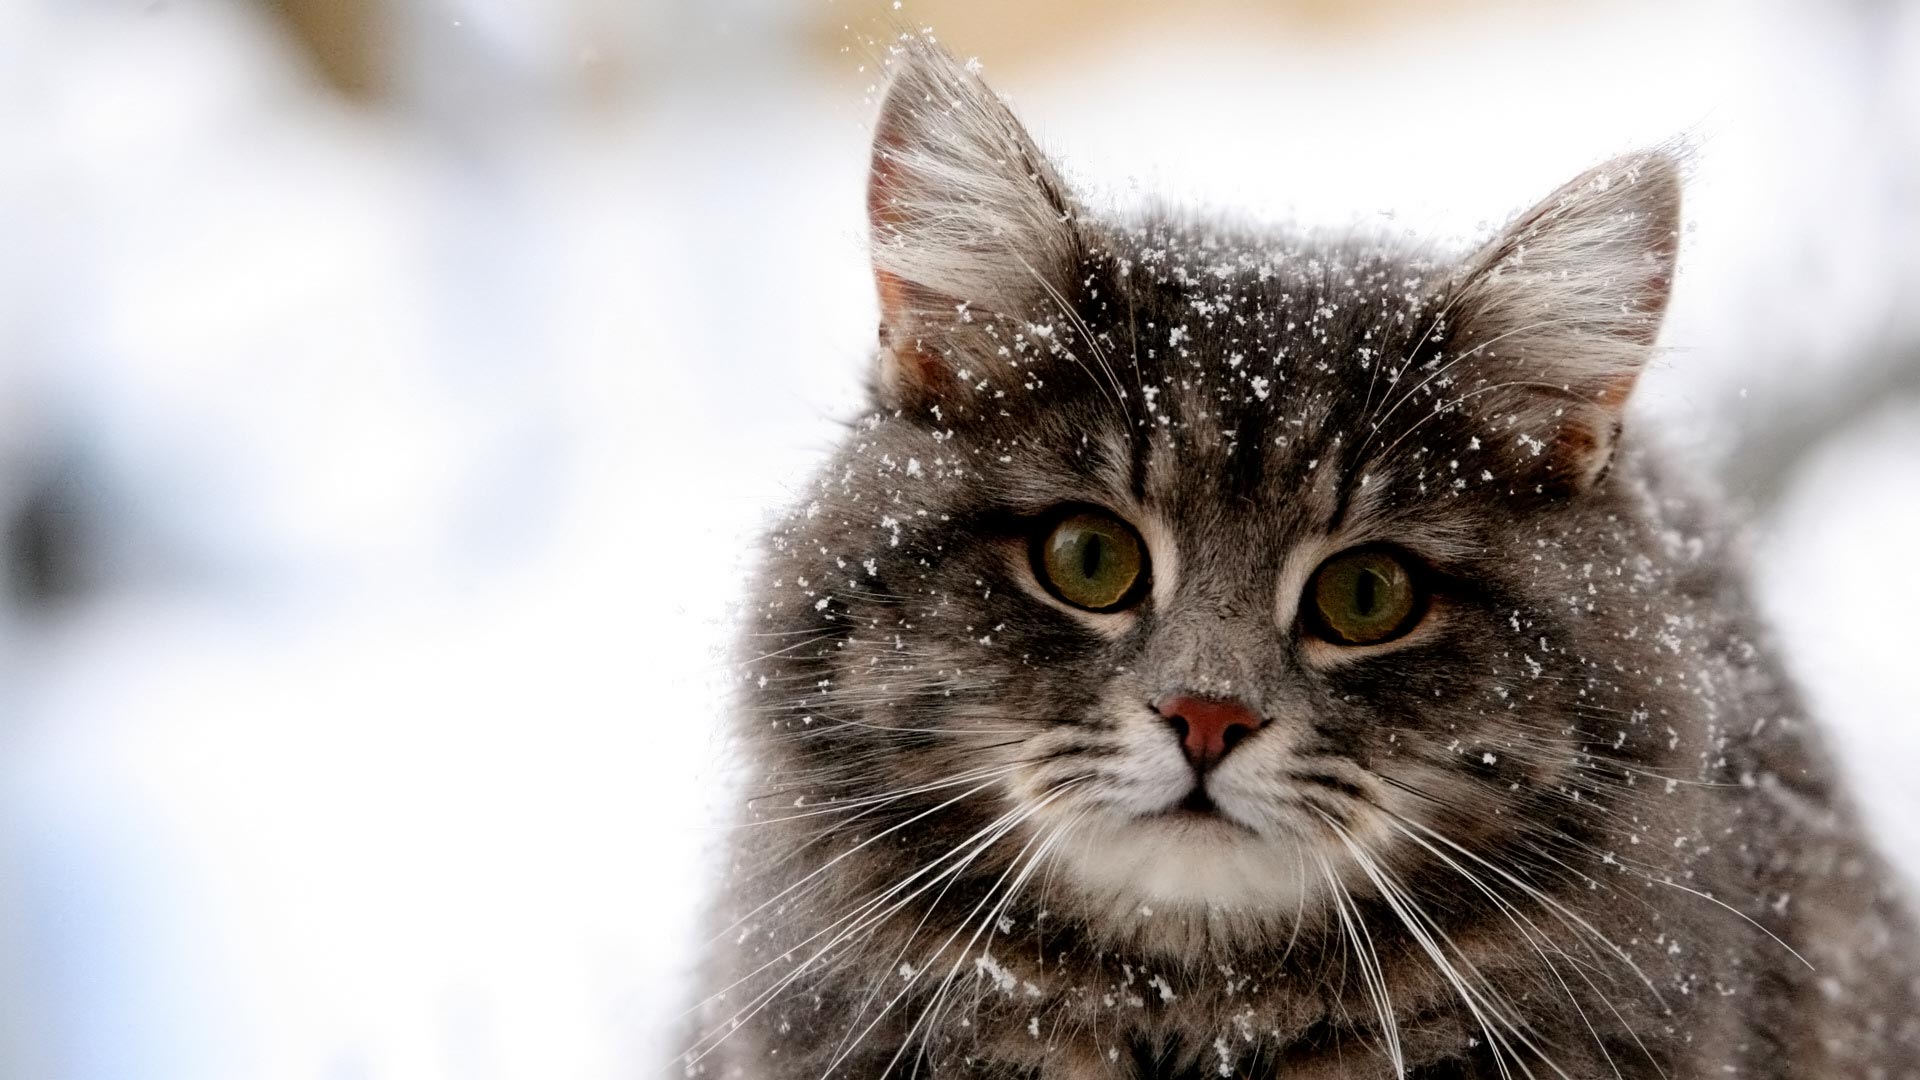 Cat - Winter coat.jpg